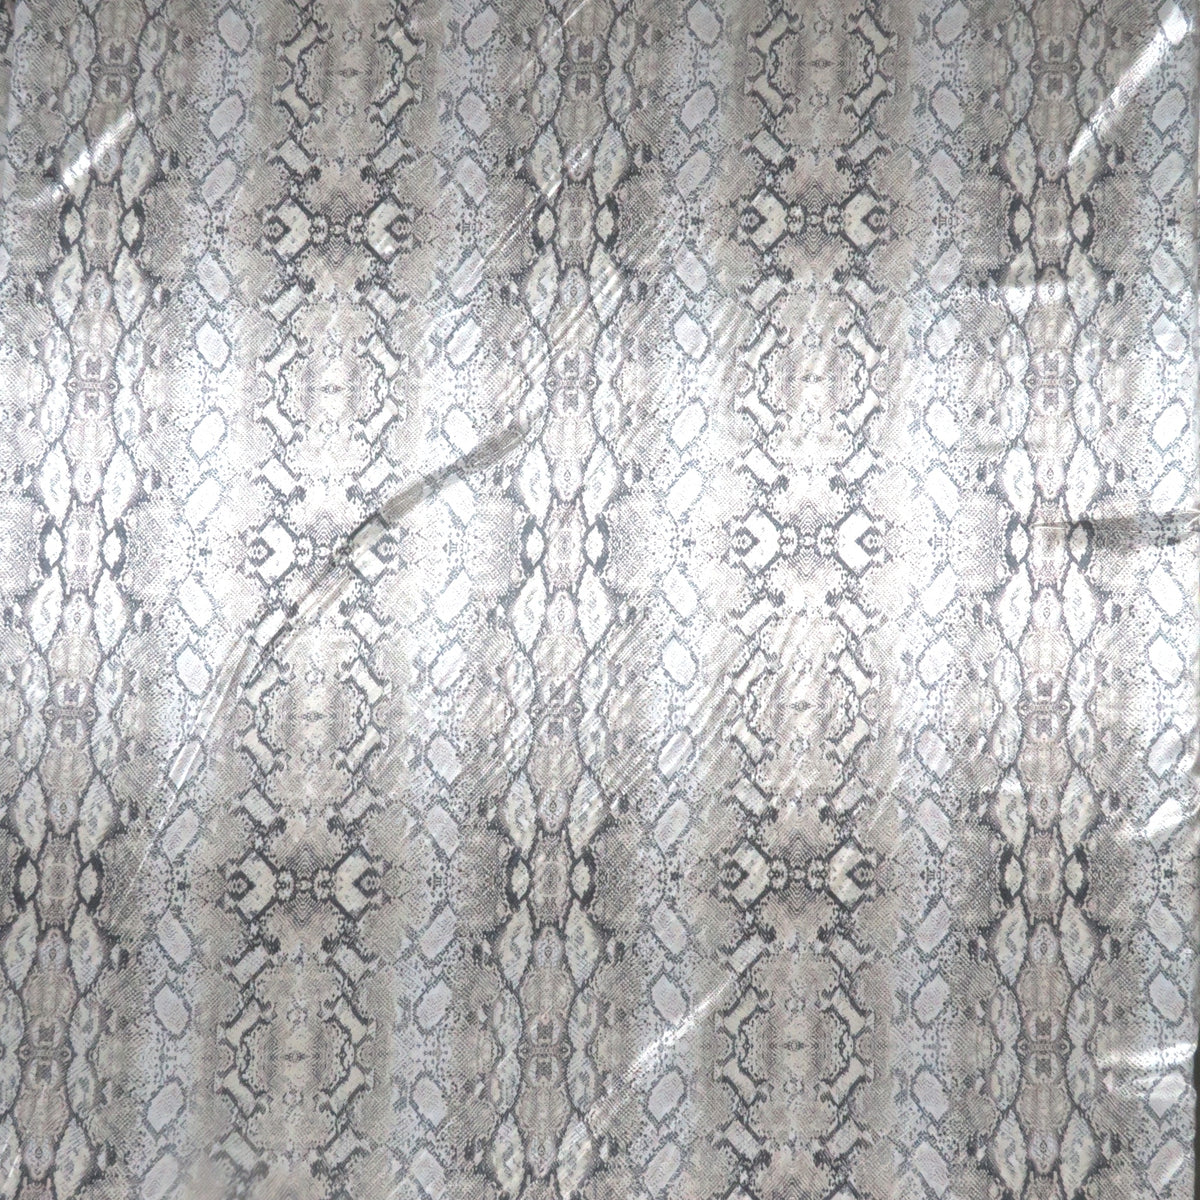 GREY Snake Skin Fabric Snakeskin Animal Print Cotton Material